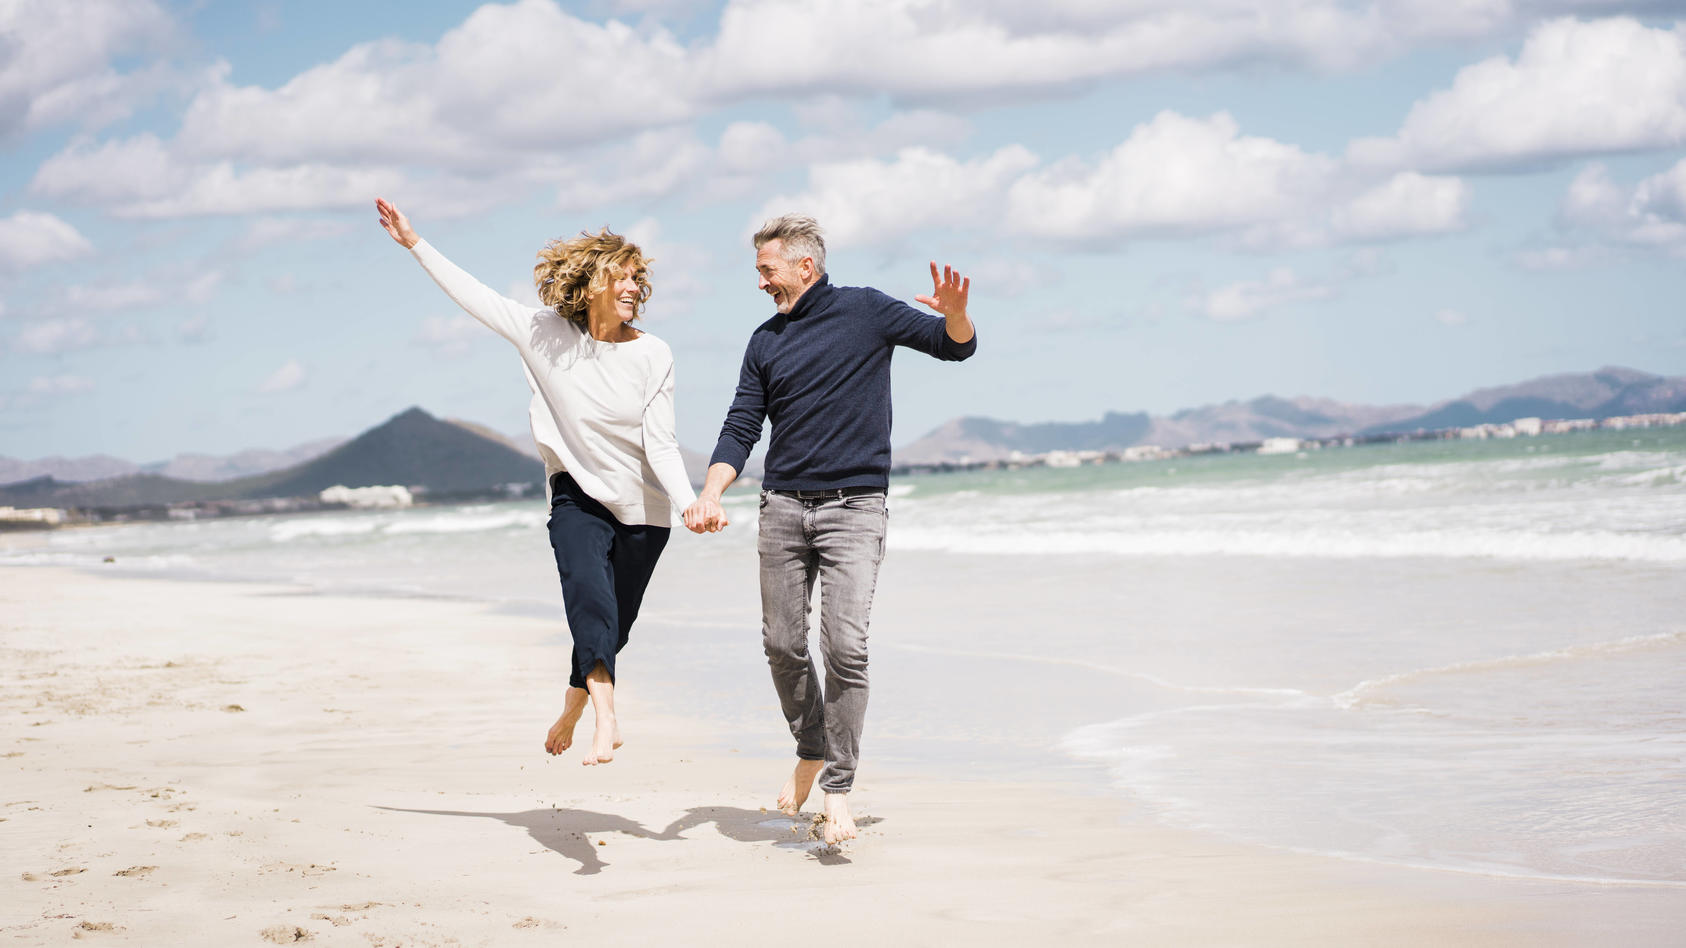 Cheerful mature couple having fun on shore at beach model released, Symbolfoto, JOSEF11419